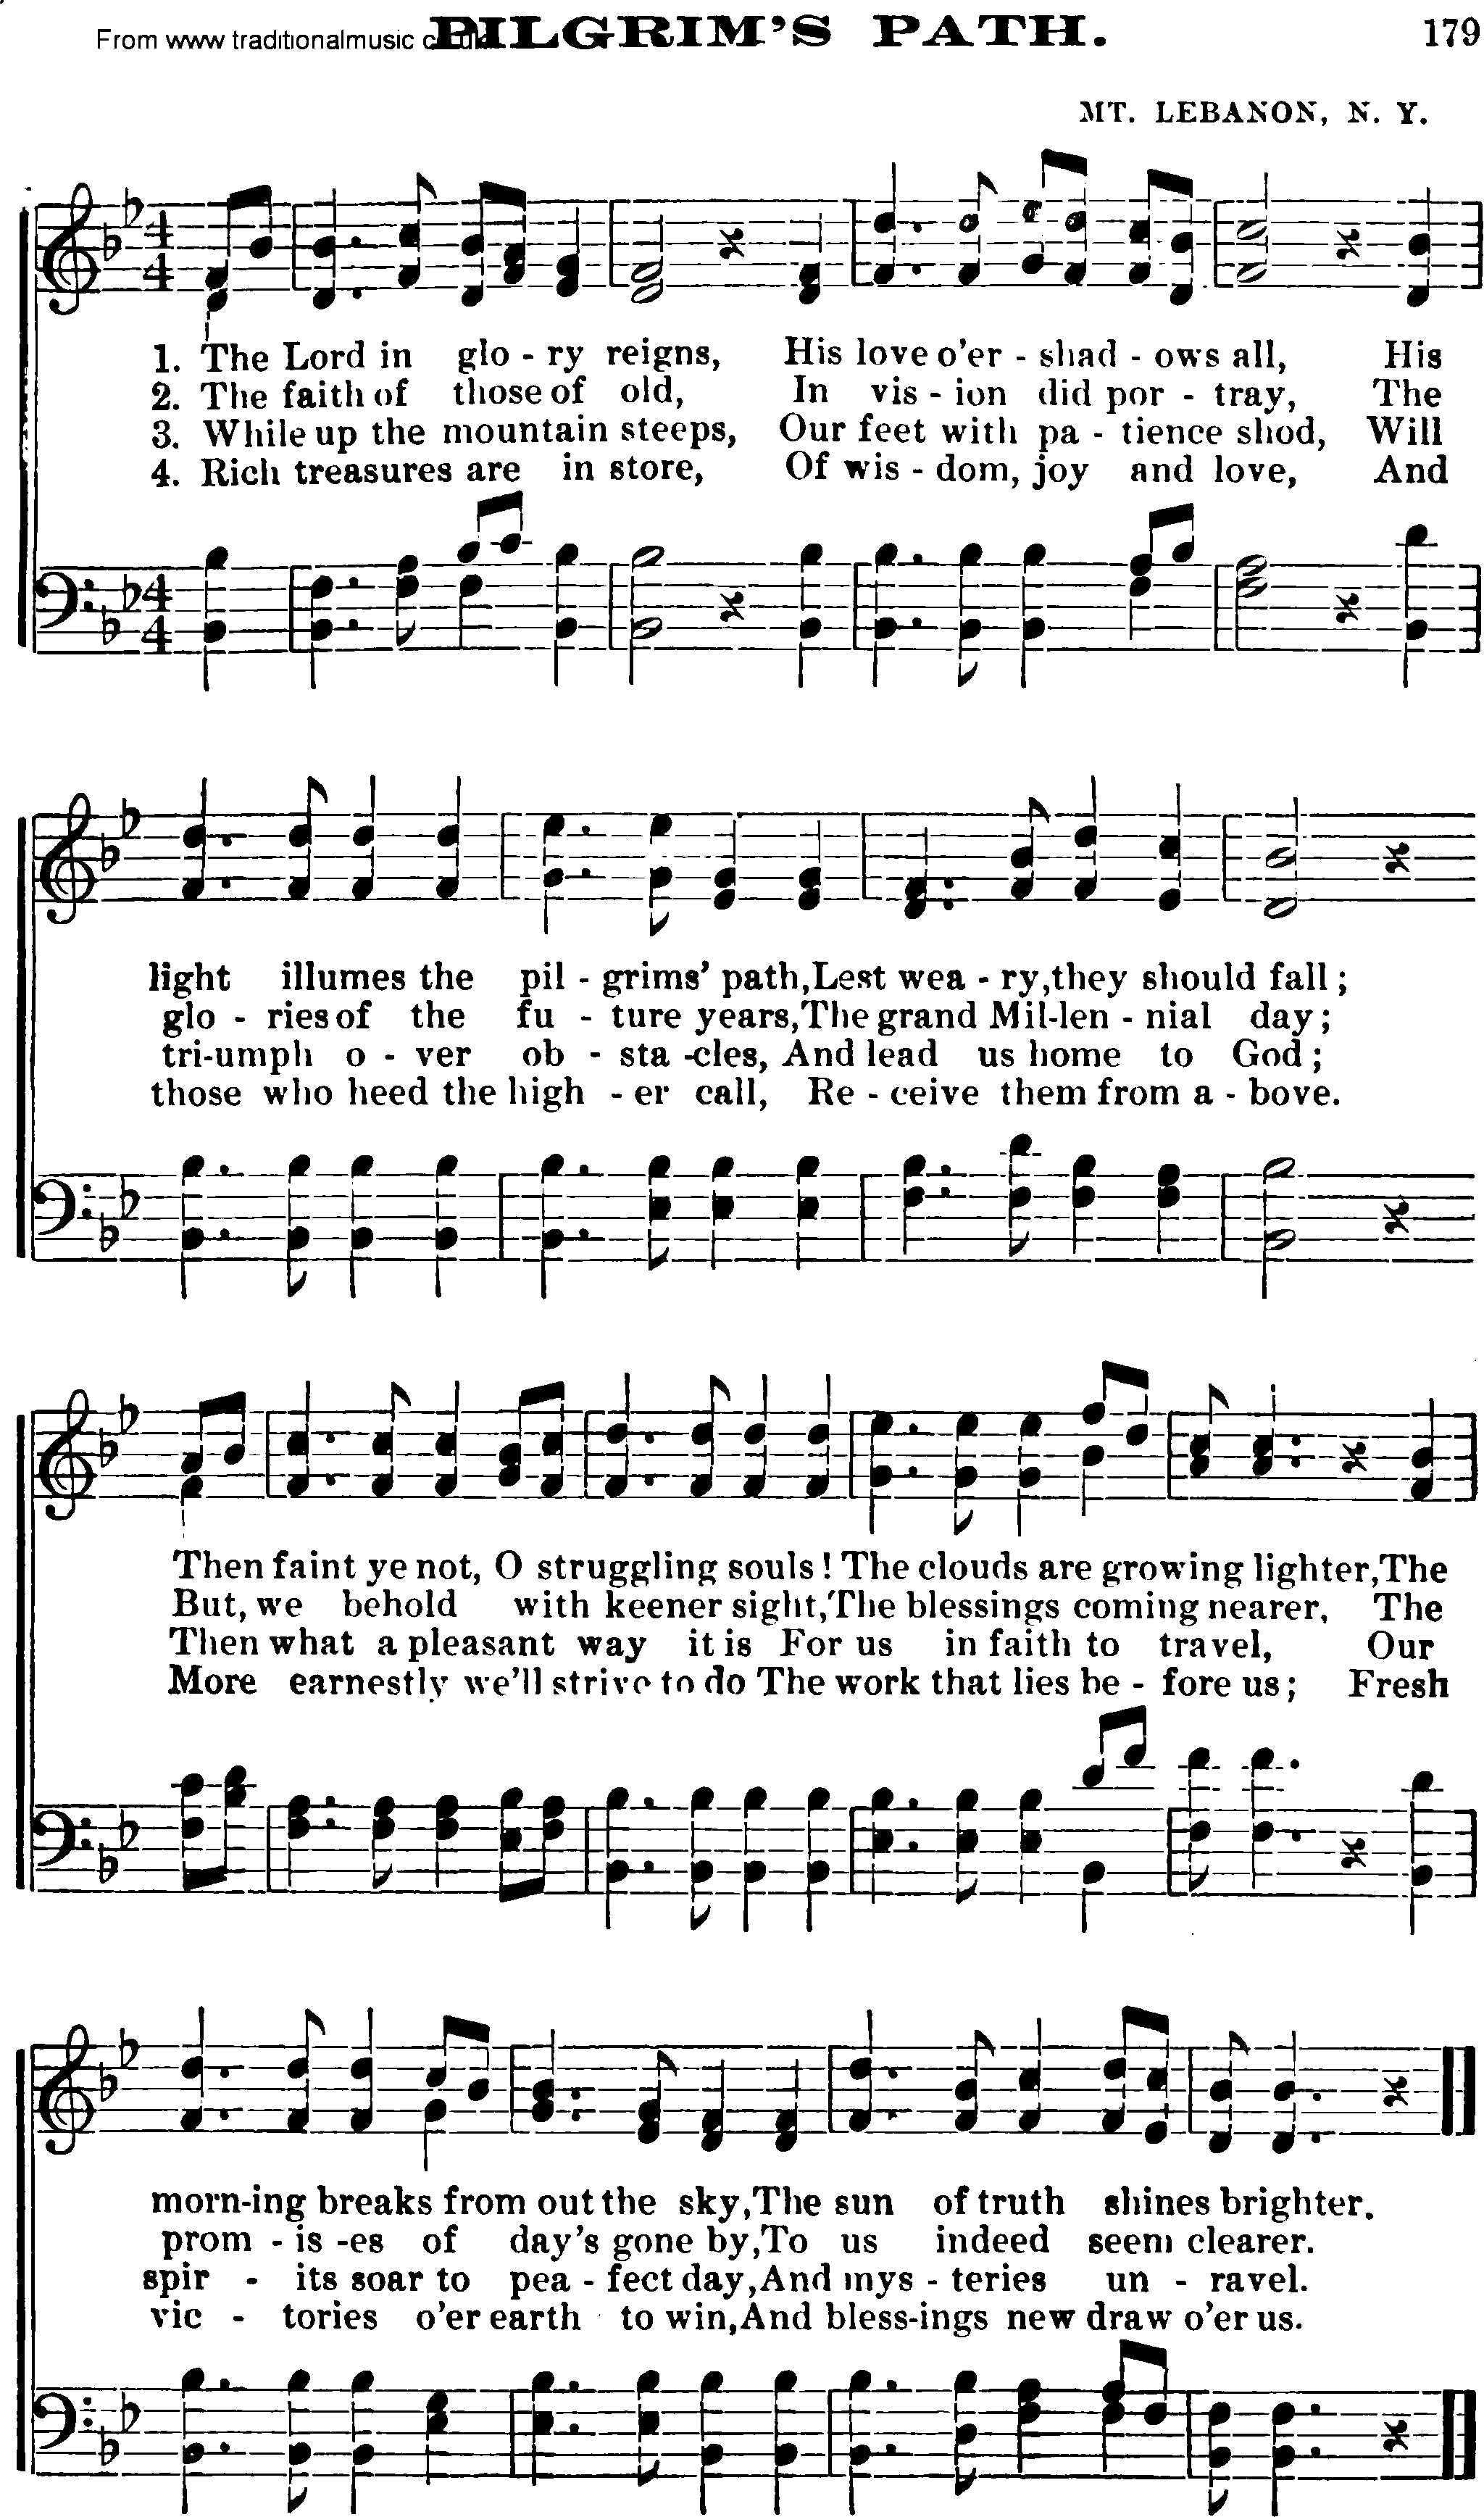 Shaker Music collection, Hymn: Pilgrims Path, sheetmusic and PDF